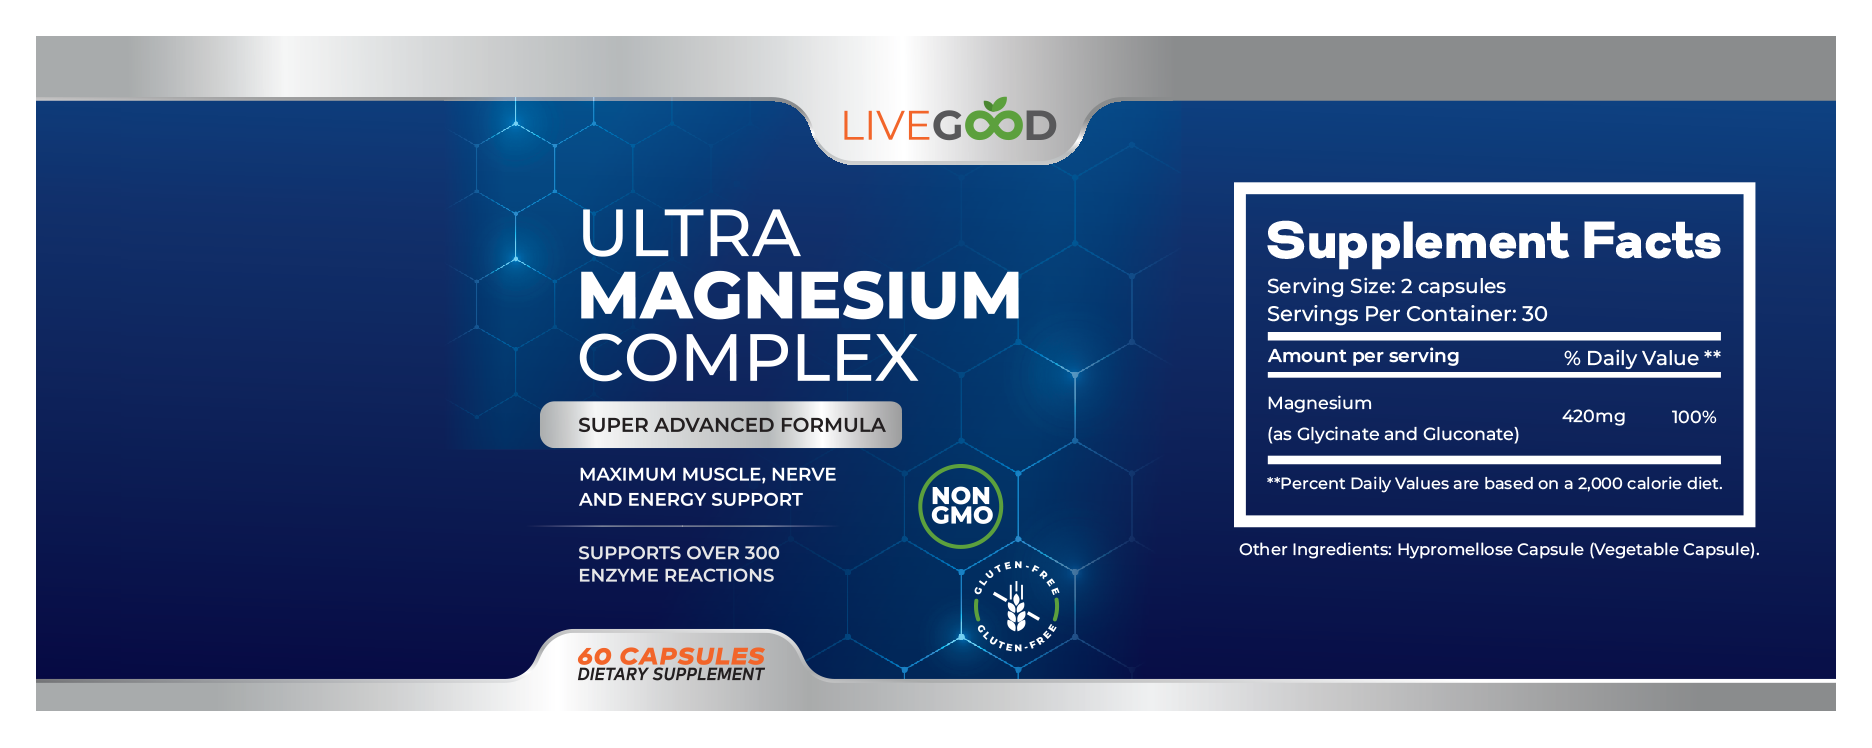 ultra-magnesium-complex-label-LiveGood-Jean-Marc-Fraiche-Partage66.com